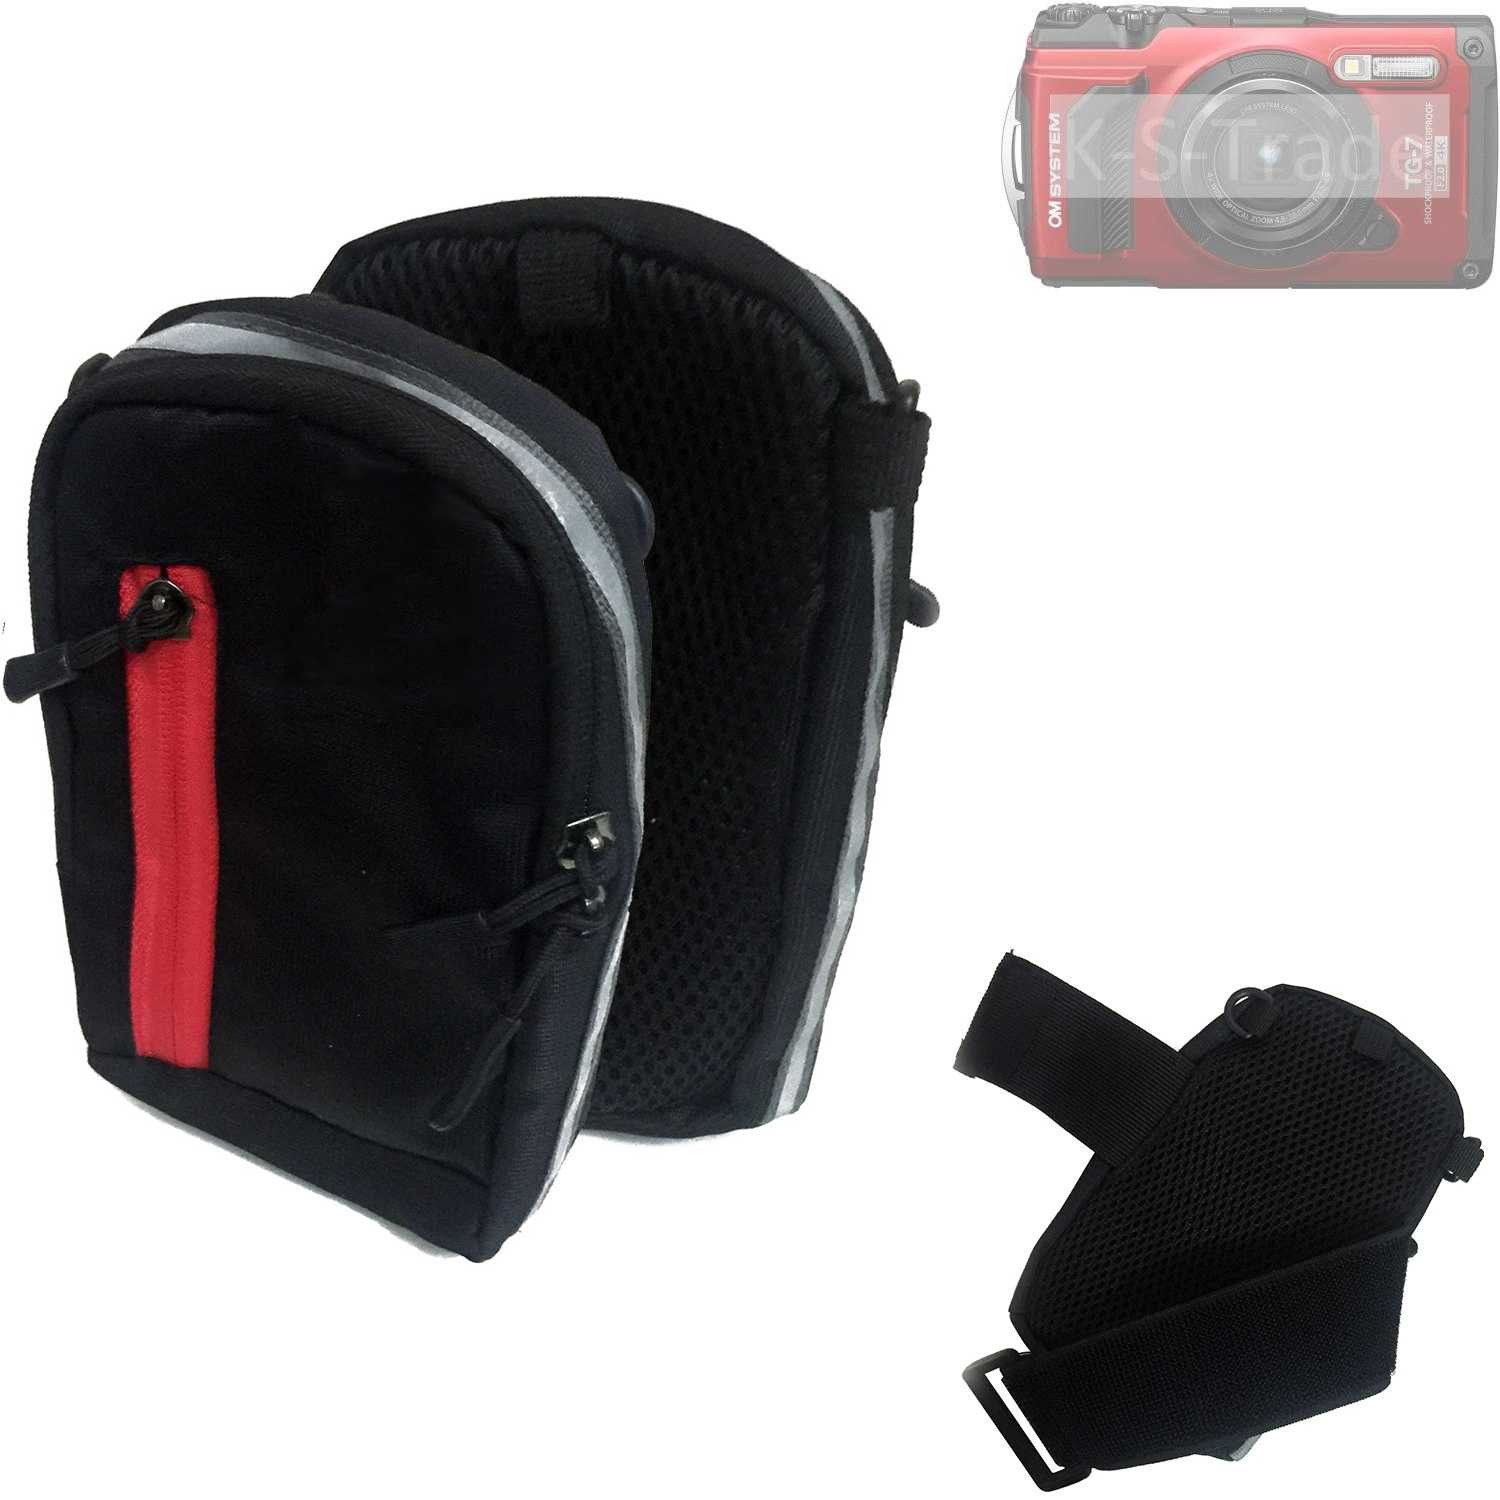 K-S-Trade Kameratasche für OM System Tough TG-7, Fototasche Kameratasche Gürteltasche Schutz Hülle Case bag